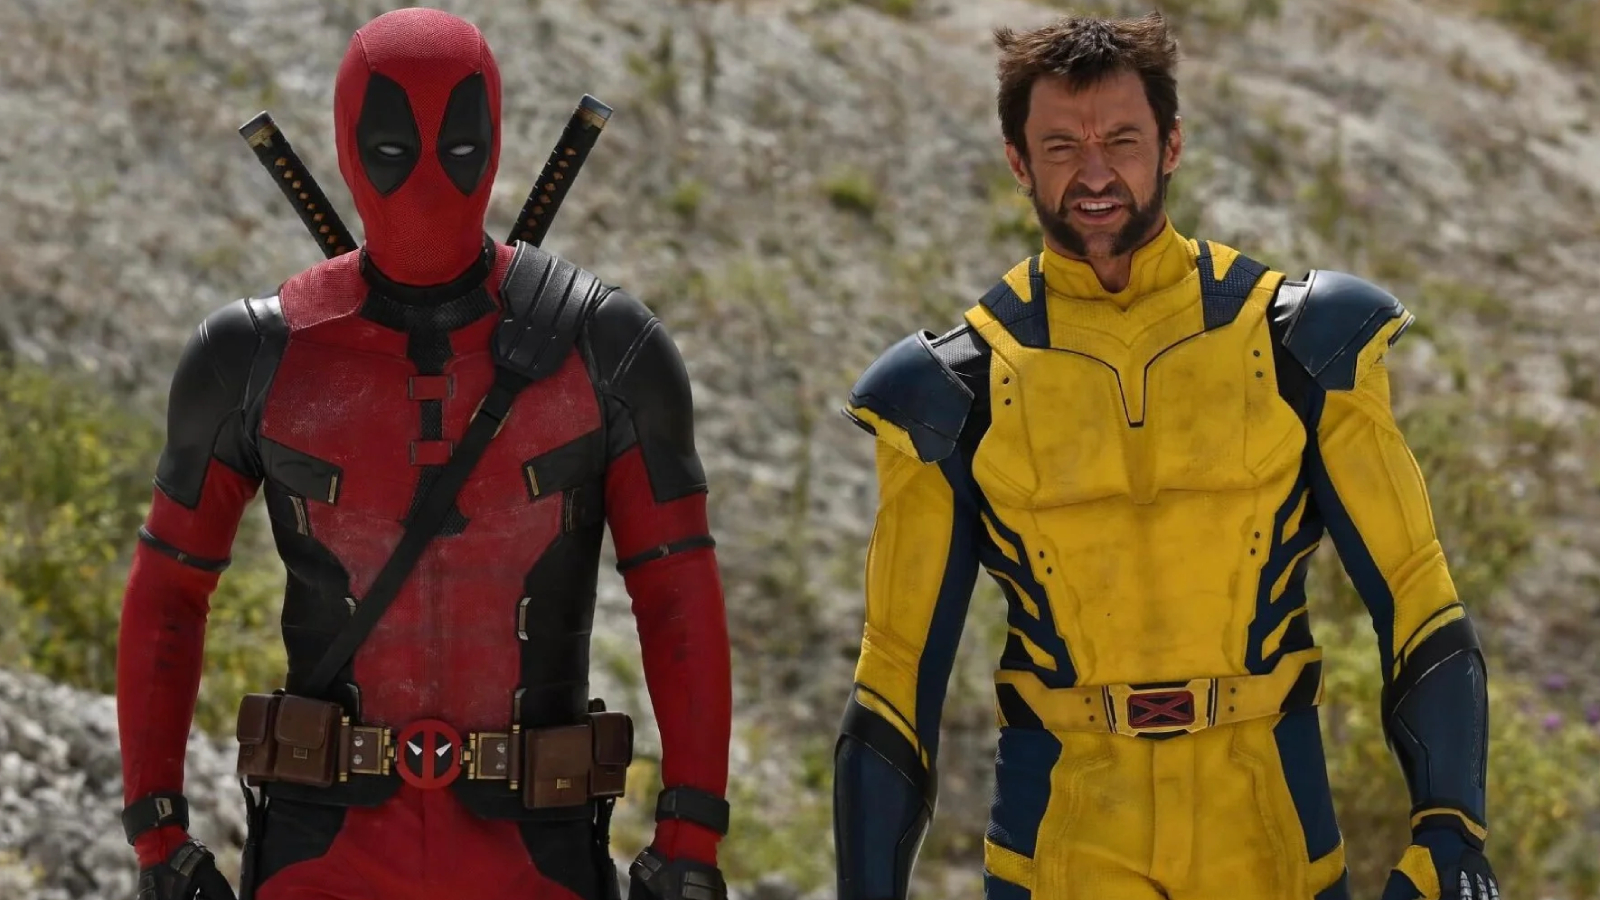 Fox Moves Ryan Reynolds' 'Deadpool 2' Forward Two Weeks to May 18